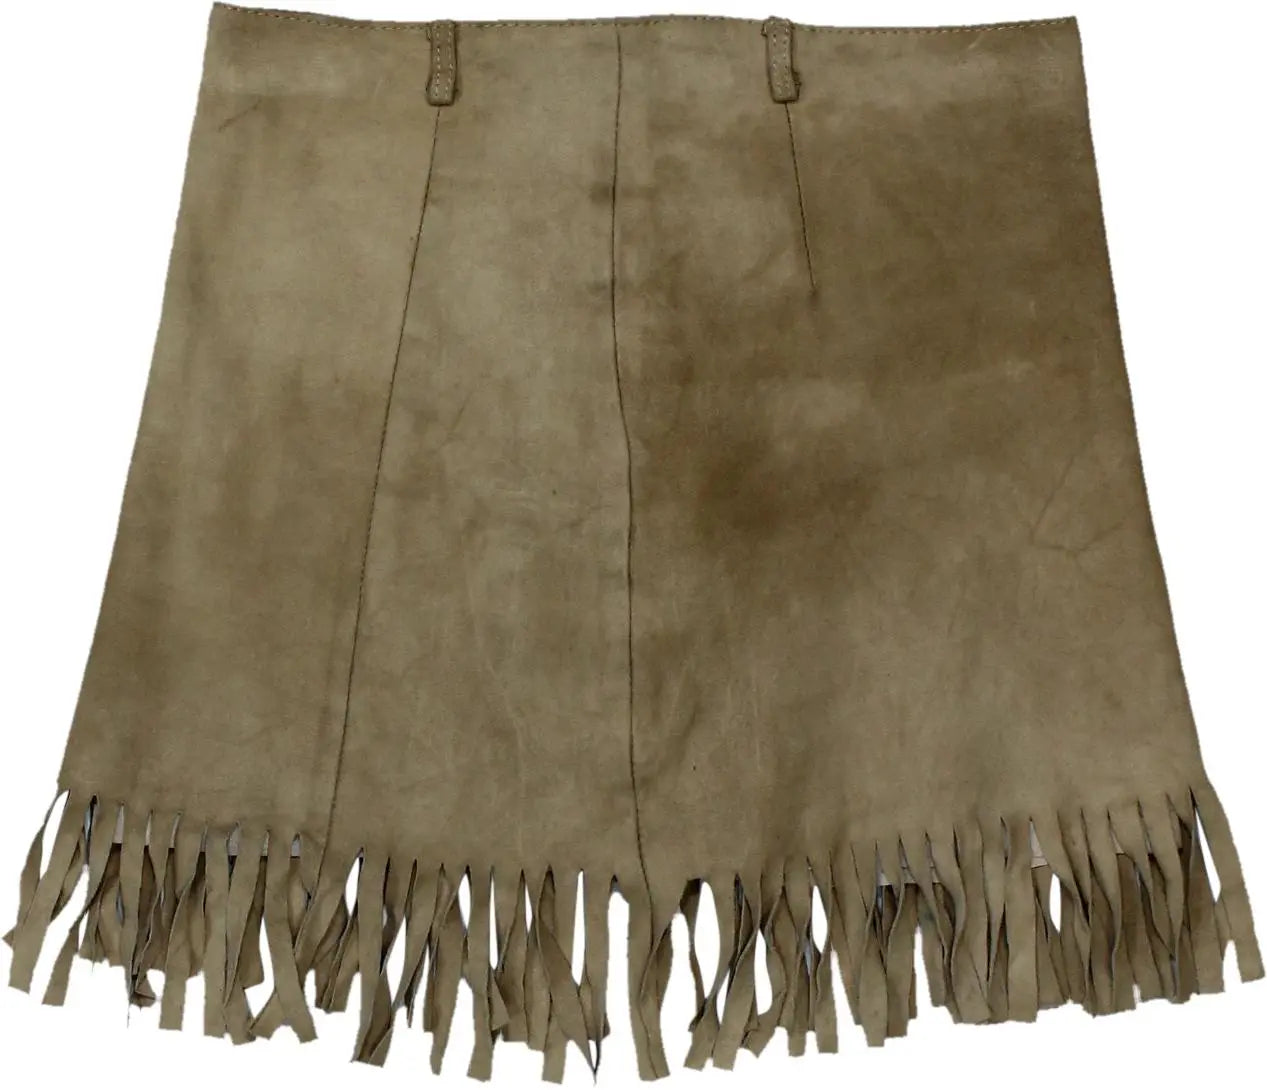 Sylvie Schimmel Paris - Beige Leather Skirt- ThriftTale.com - Vintage and second handclothing